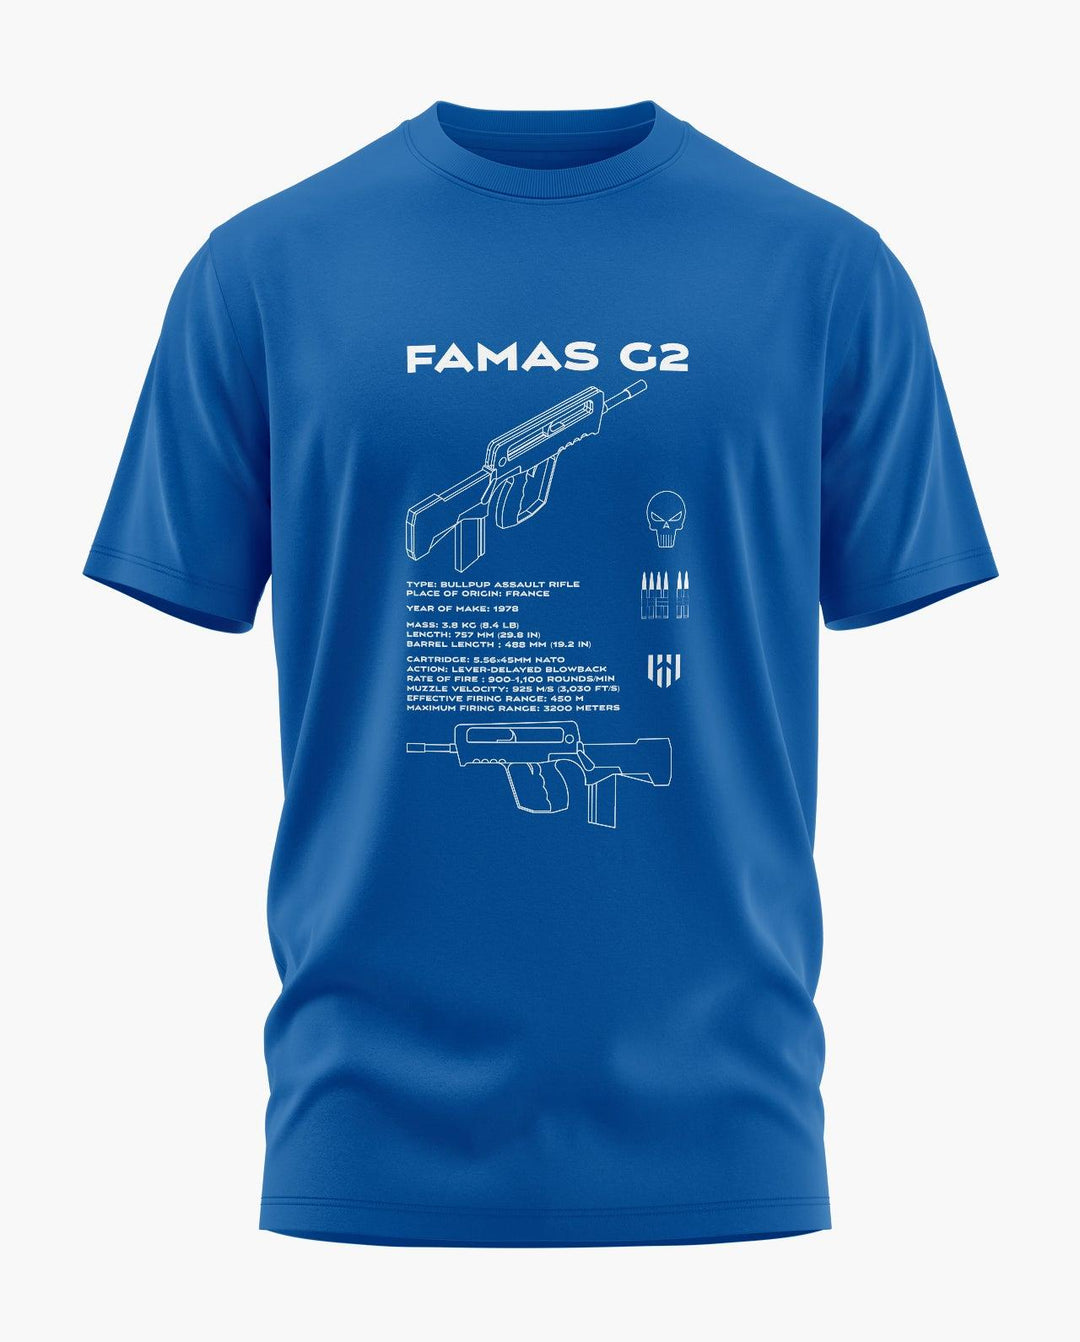 Famas G2 Blueprint T-Shirt - Aero Armour